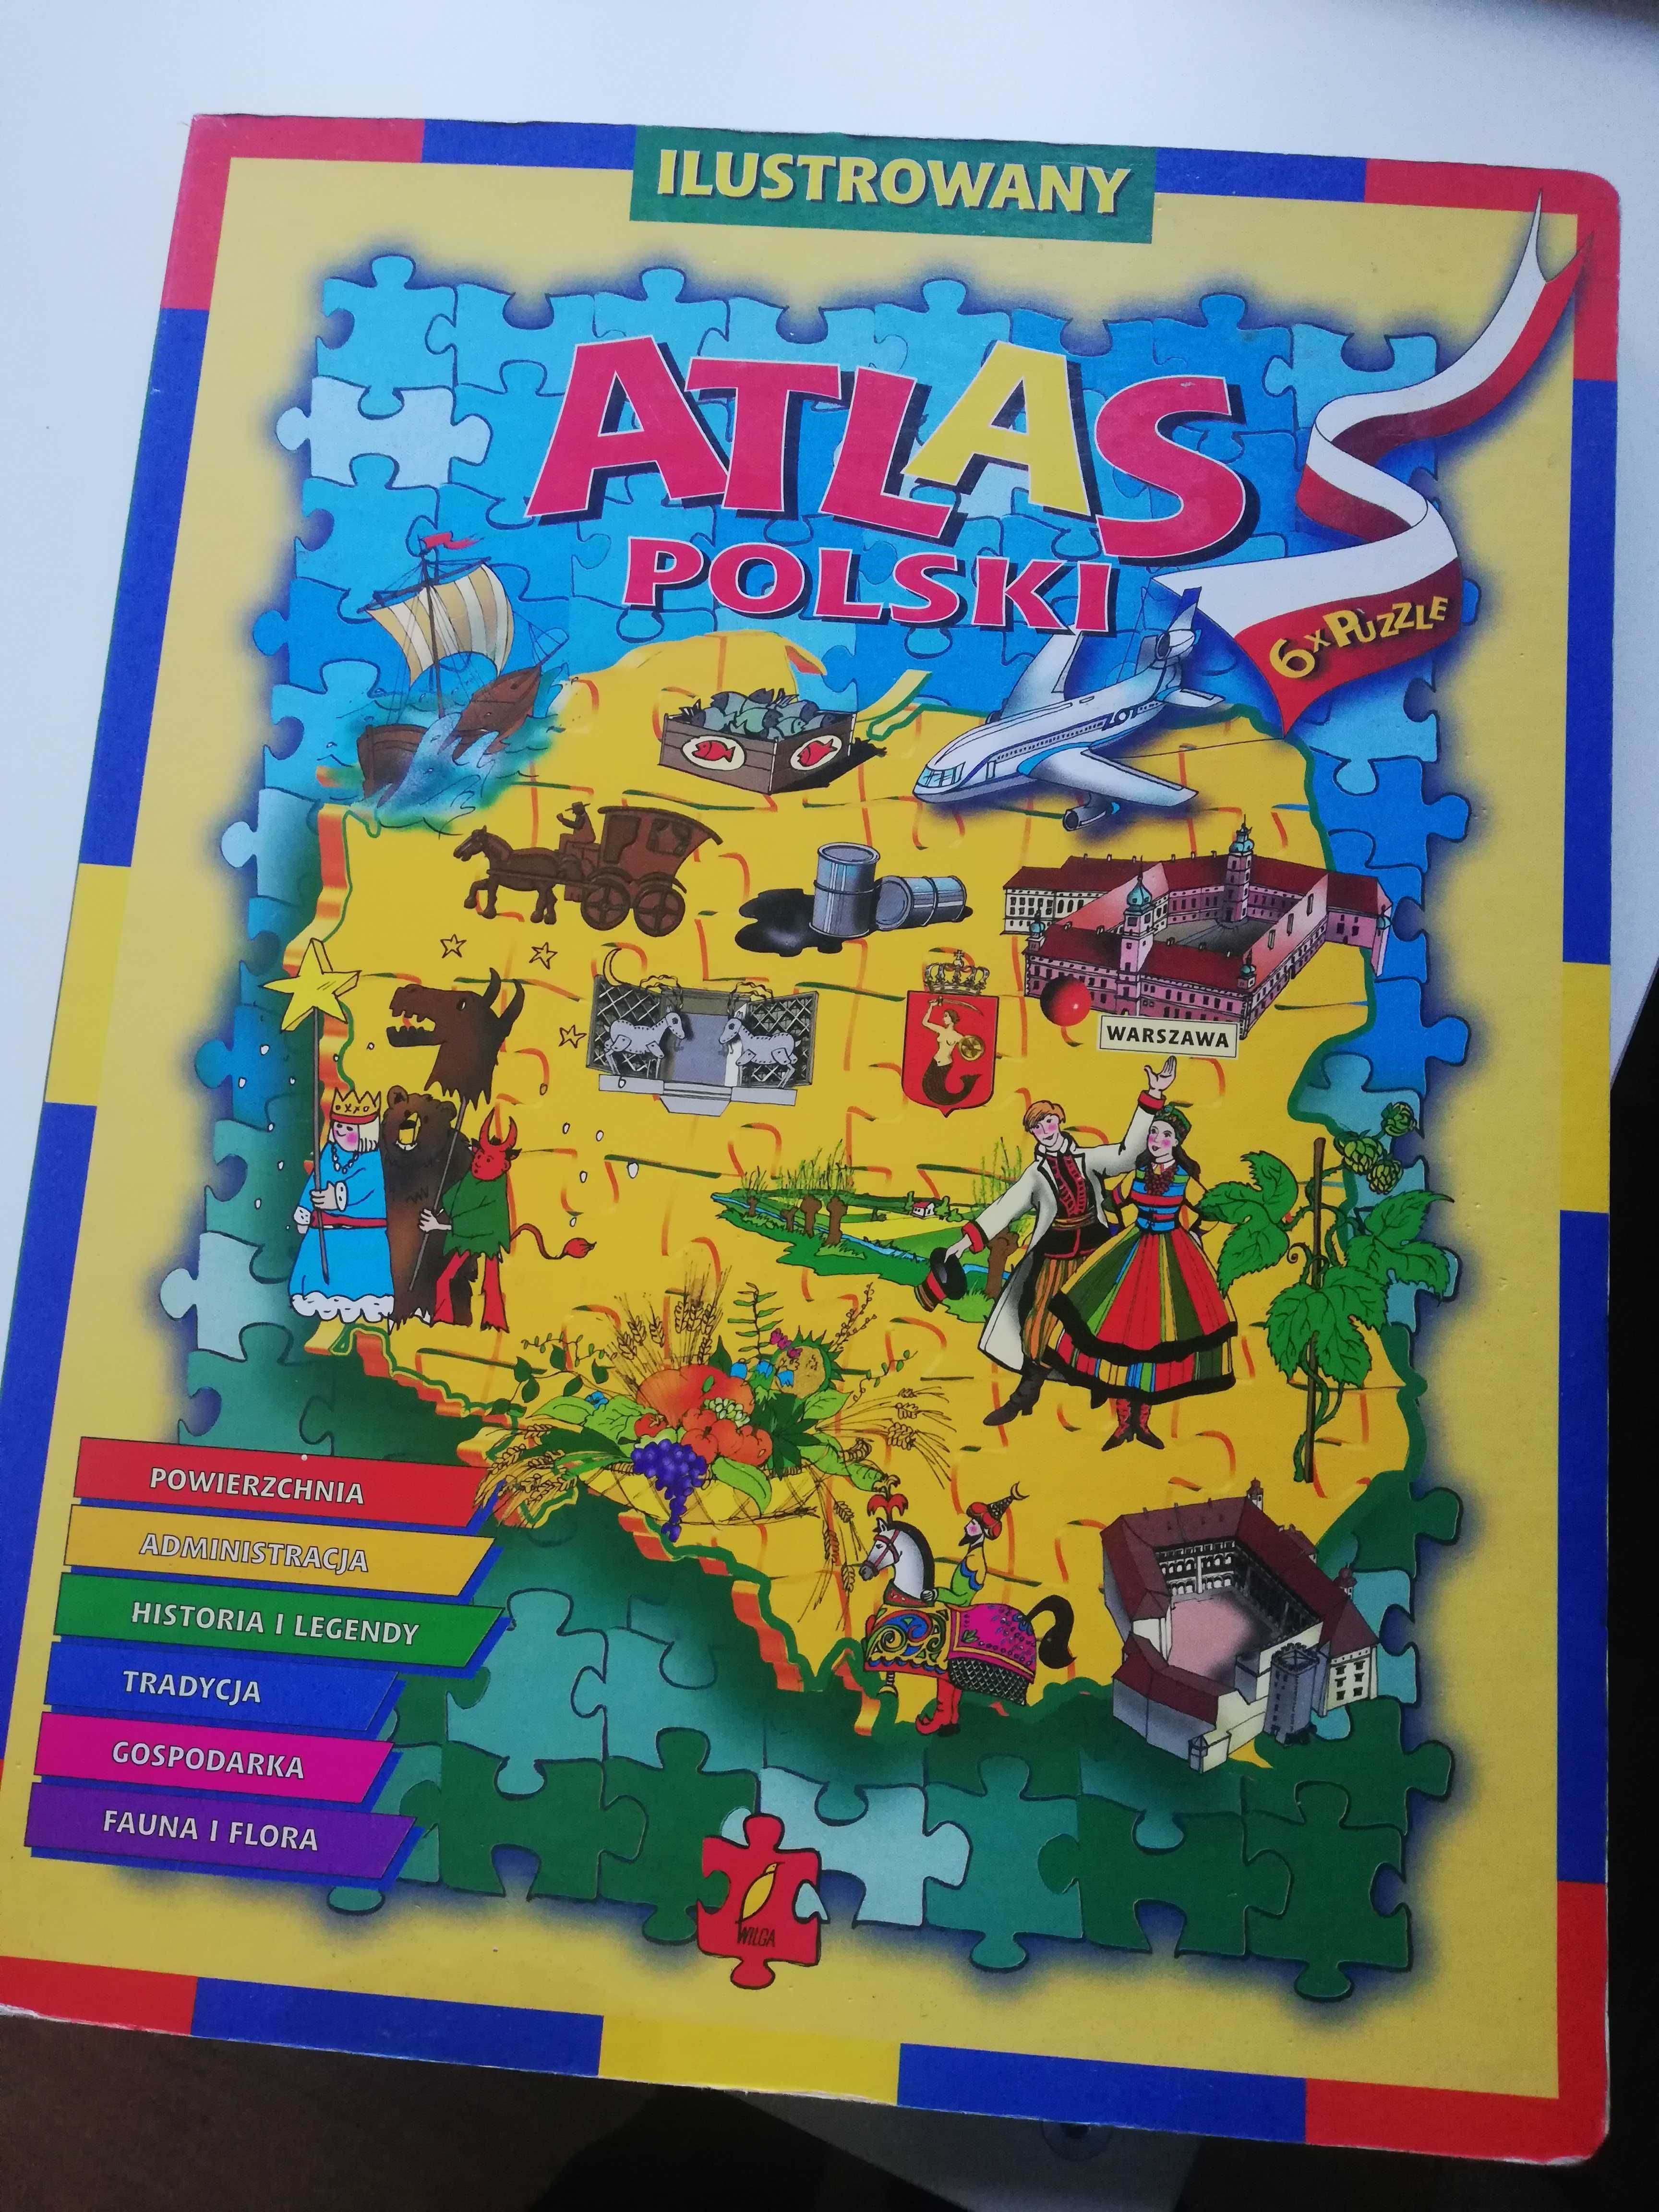 Atlas Polski ilustrowany, 6 x puzle